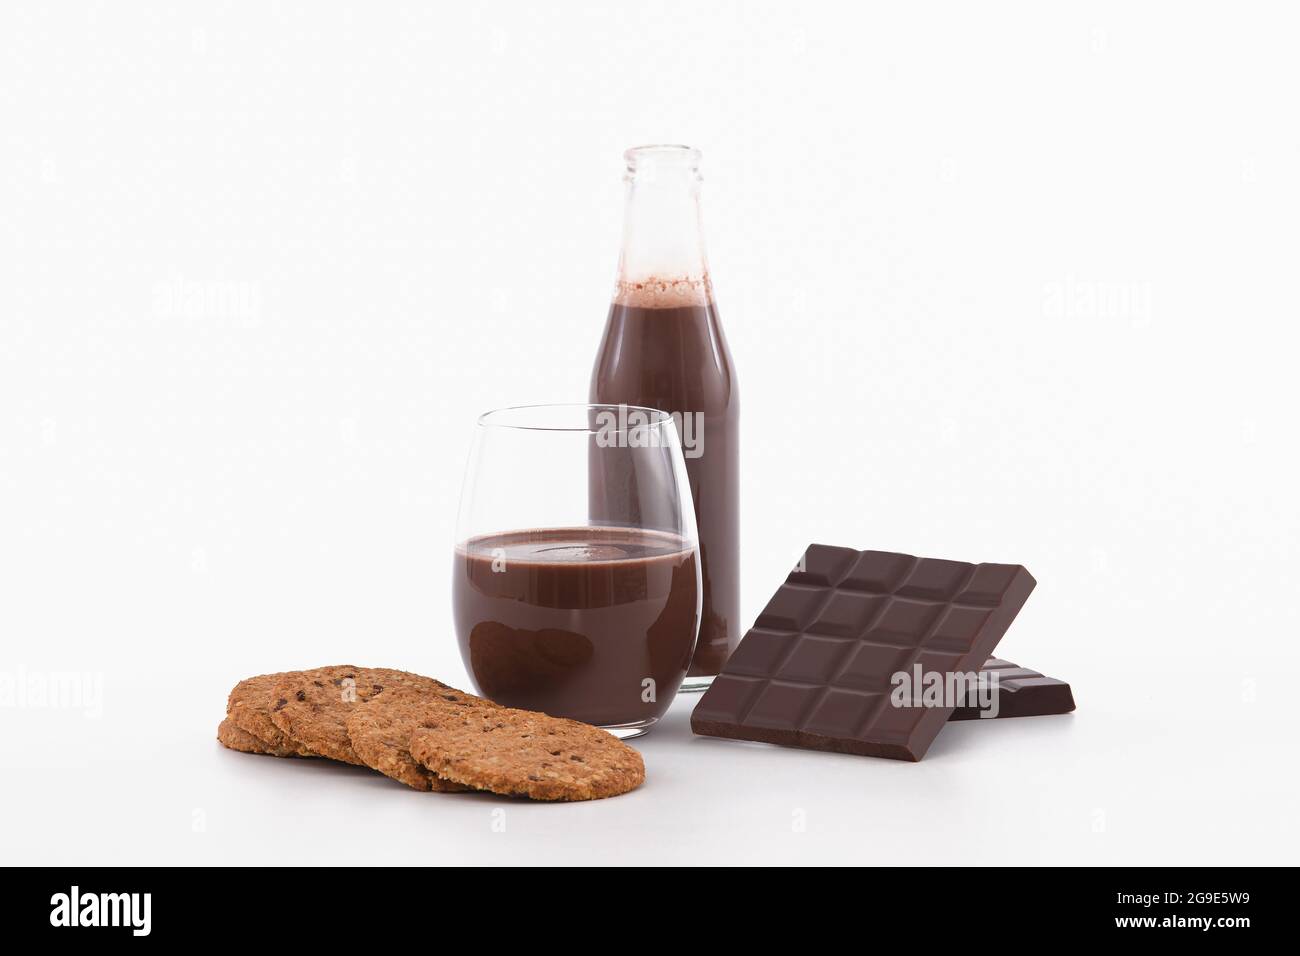 https://c8.alamy.com/comp/2G9E5W9/glass-bottle-of-sweet-chocolate-milkshake-and-chocolate-bars-on-the-white-background-2G9E5W9.jpg